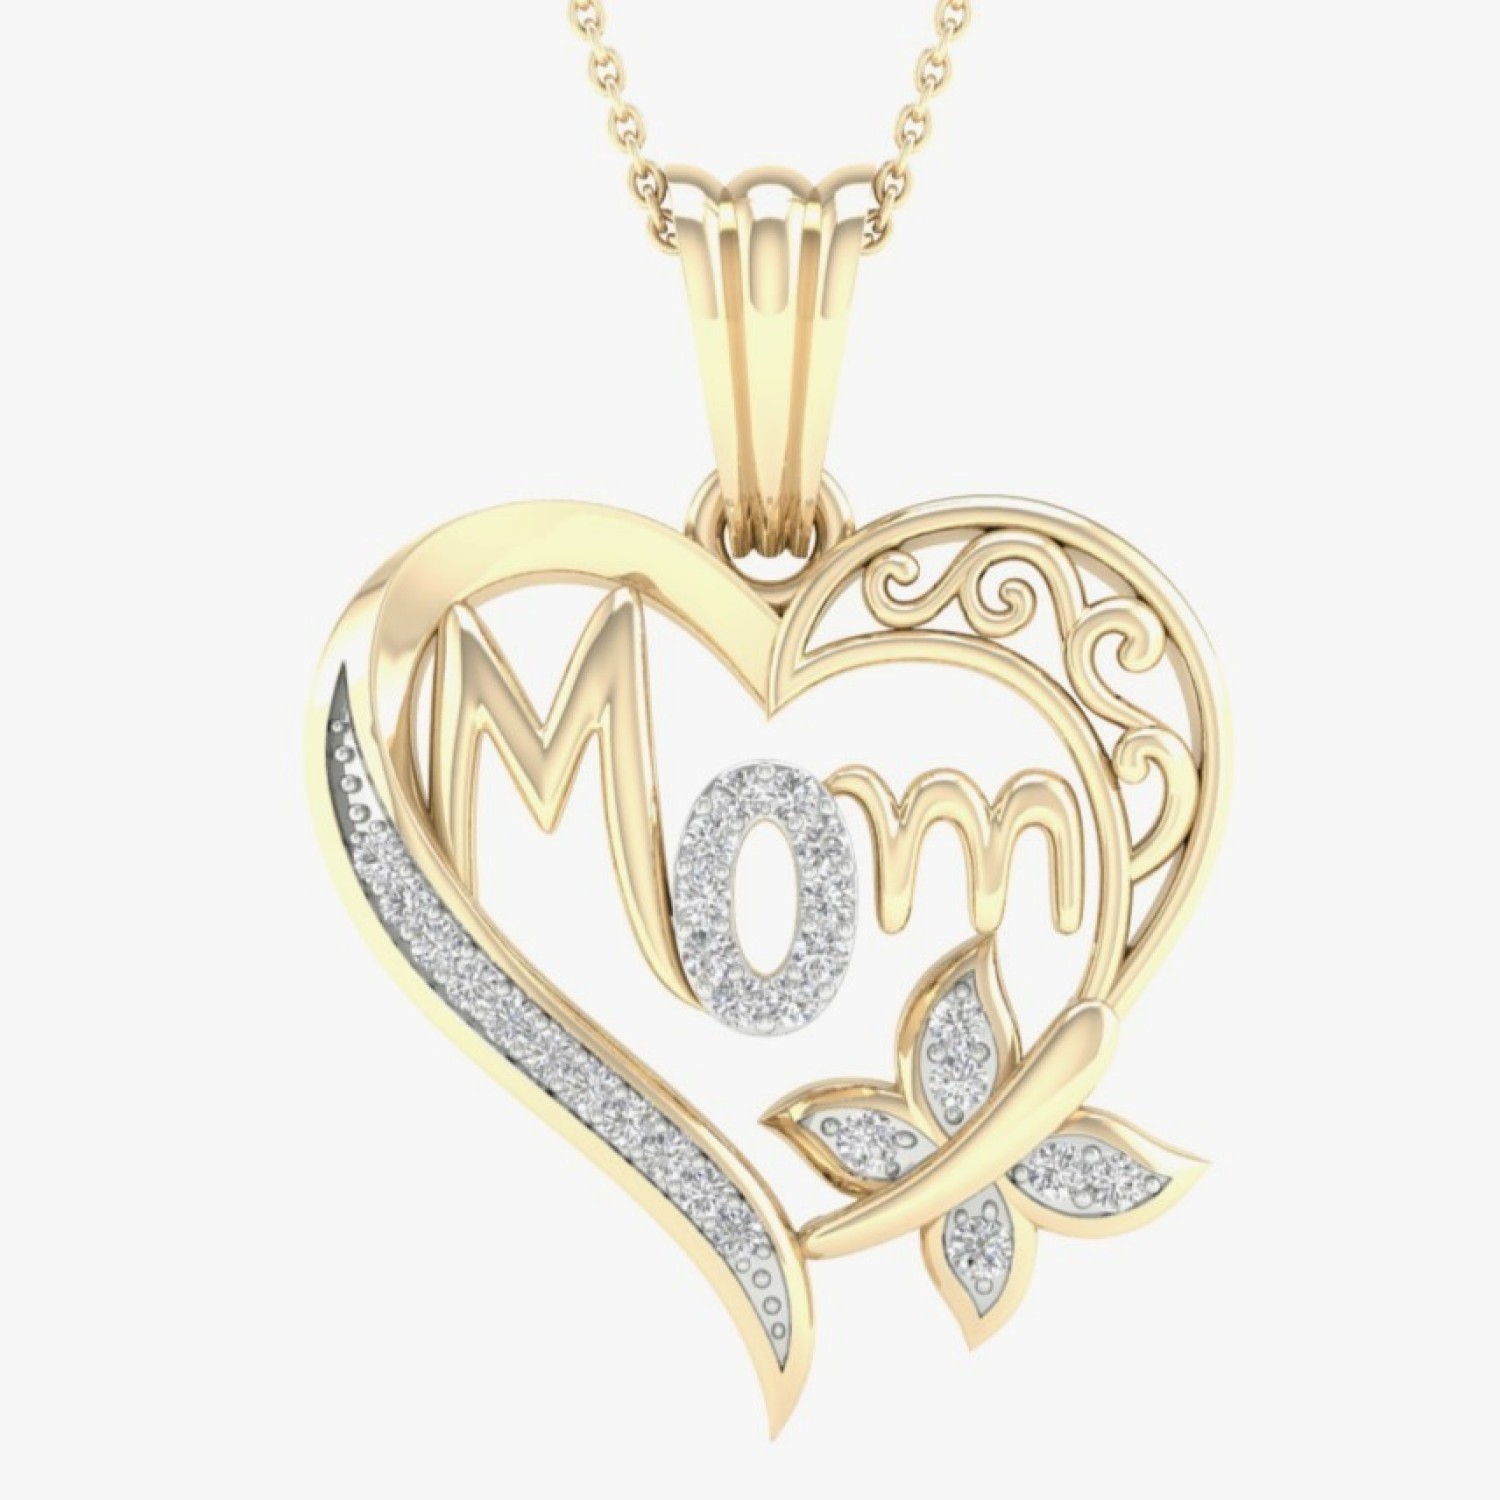 9ct Gold Diamond Set Mom Pendant PH2784 |5 Year Guarantee - FREE DELIVERY